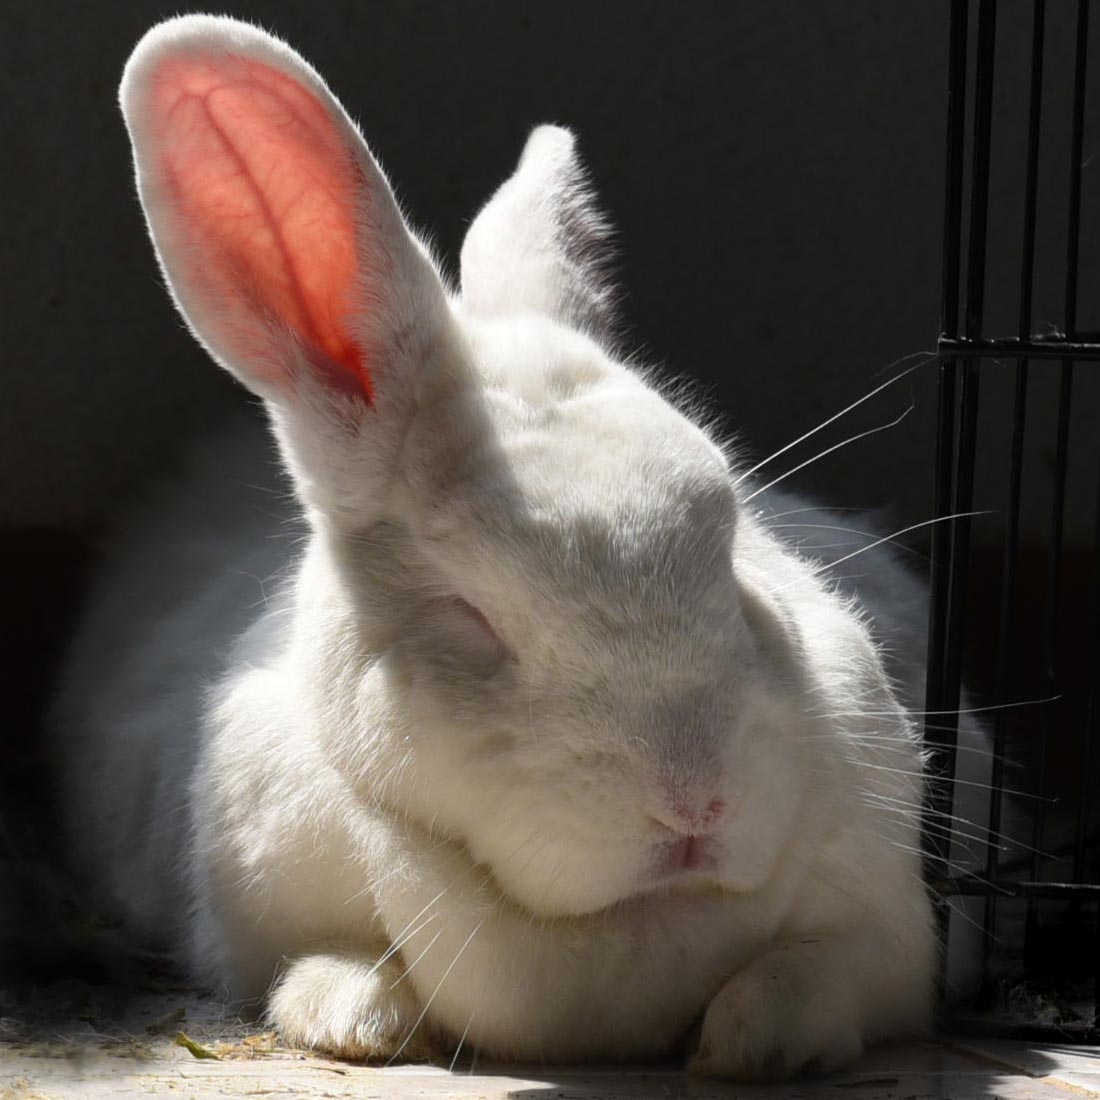 Big white bunny naps in a sunbeam.